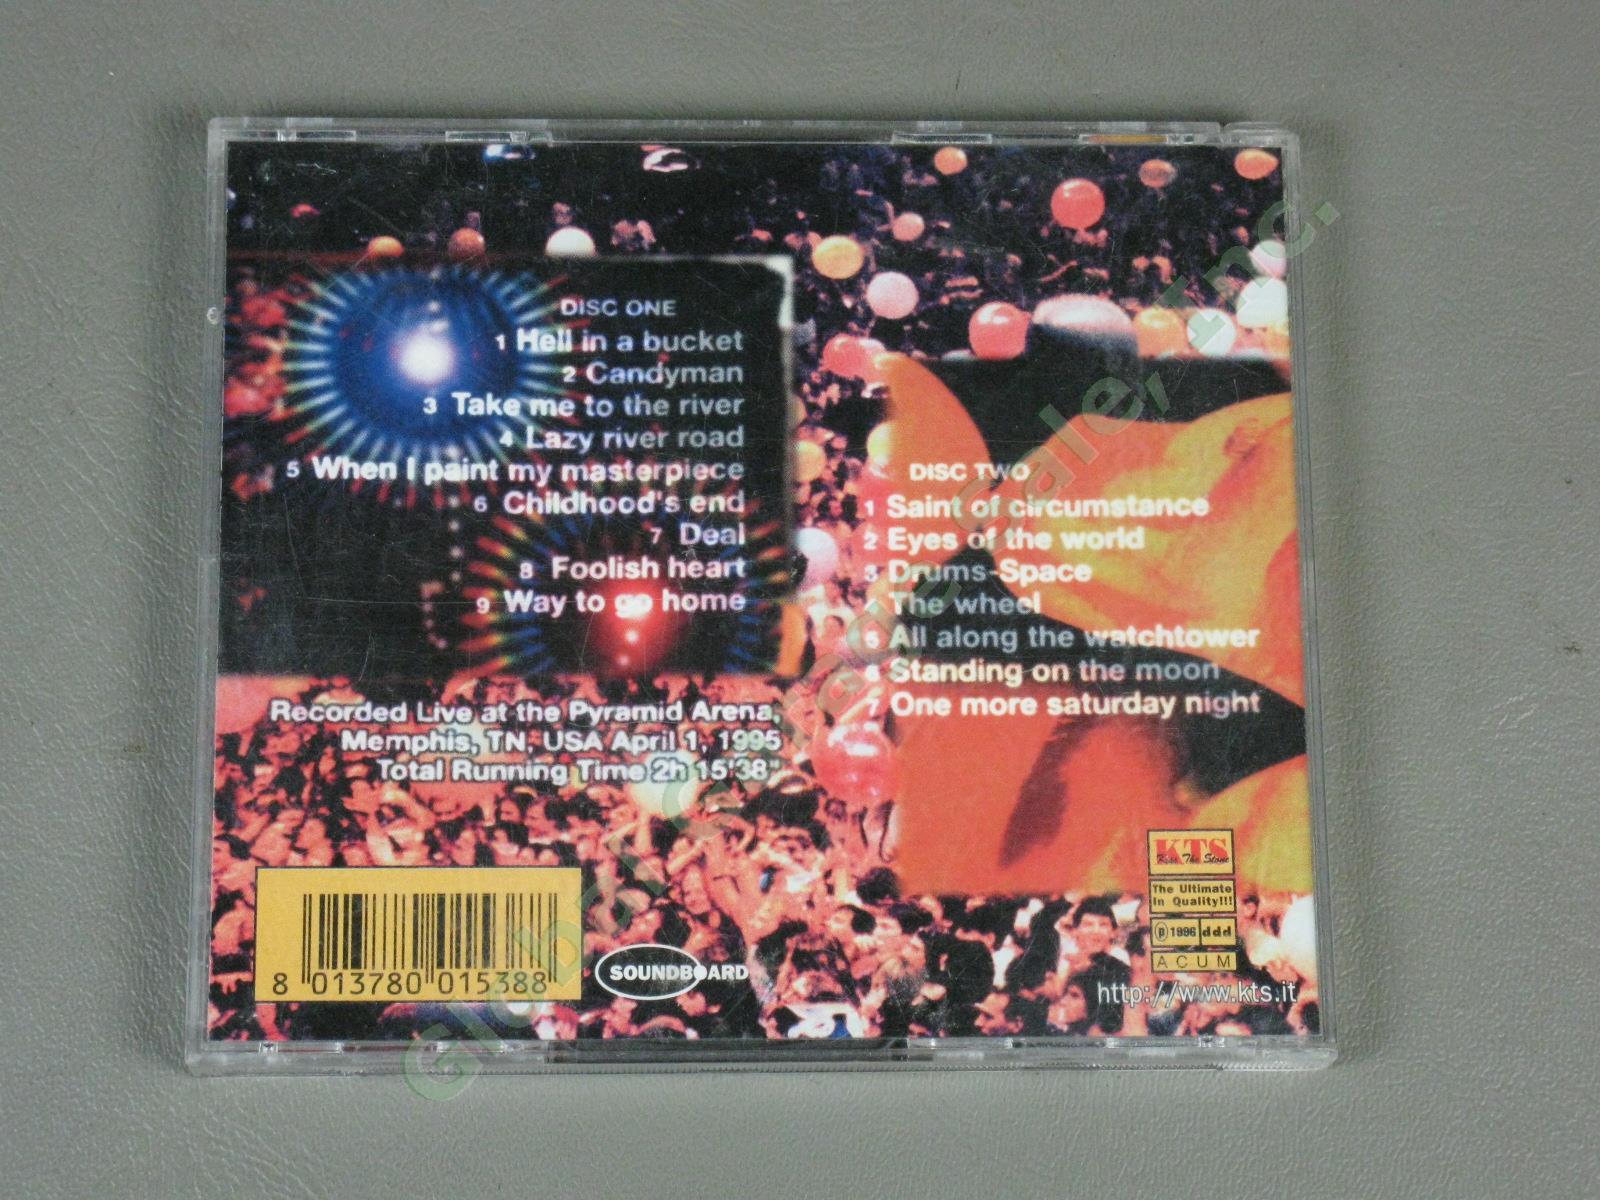 Vtg 1990s Grateful Dead Live Unreleased Show Concert Import CD VHS Lot 16 Discs 16